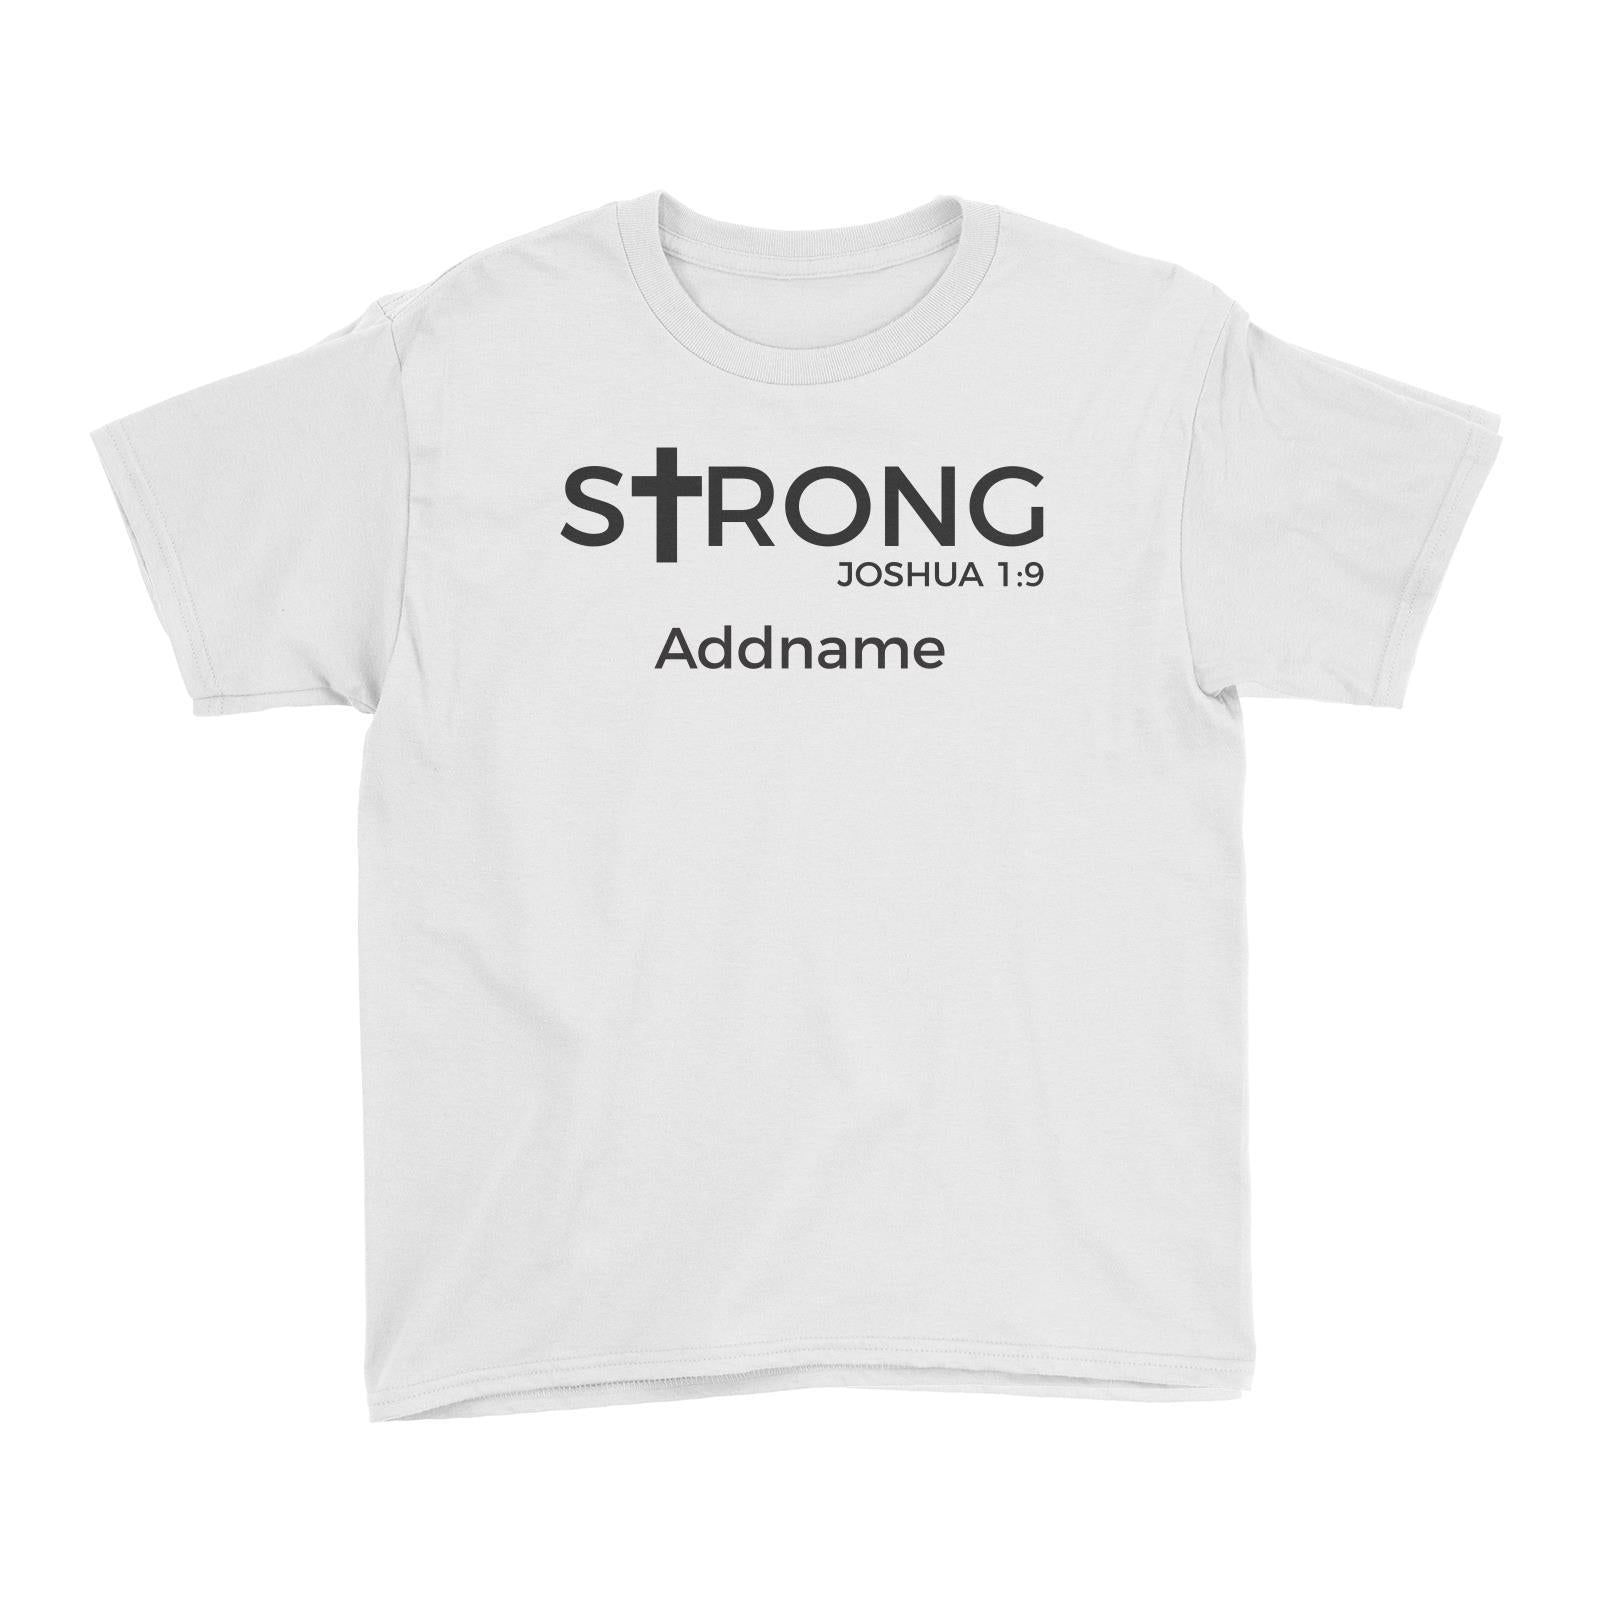 Christian Series Strong Joshua 1.9 Addname Kid's T-Shirt